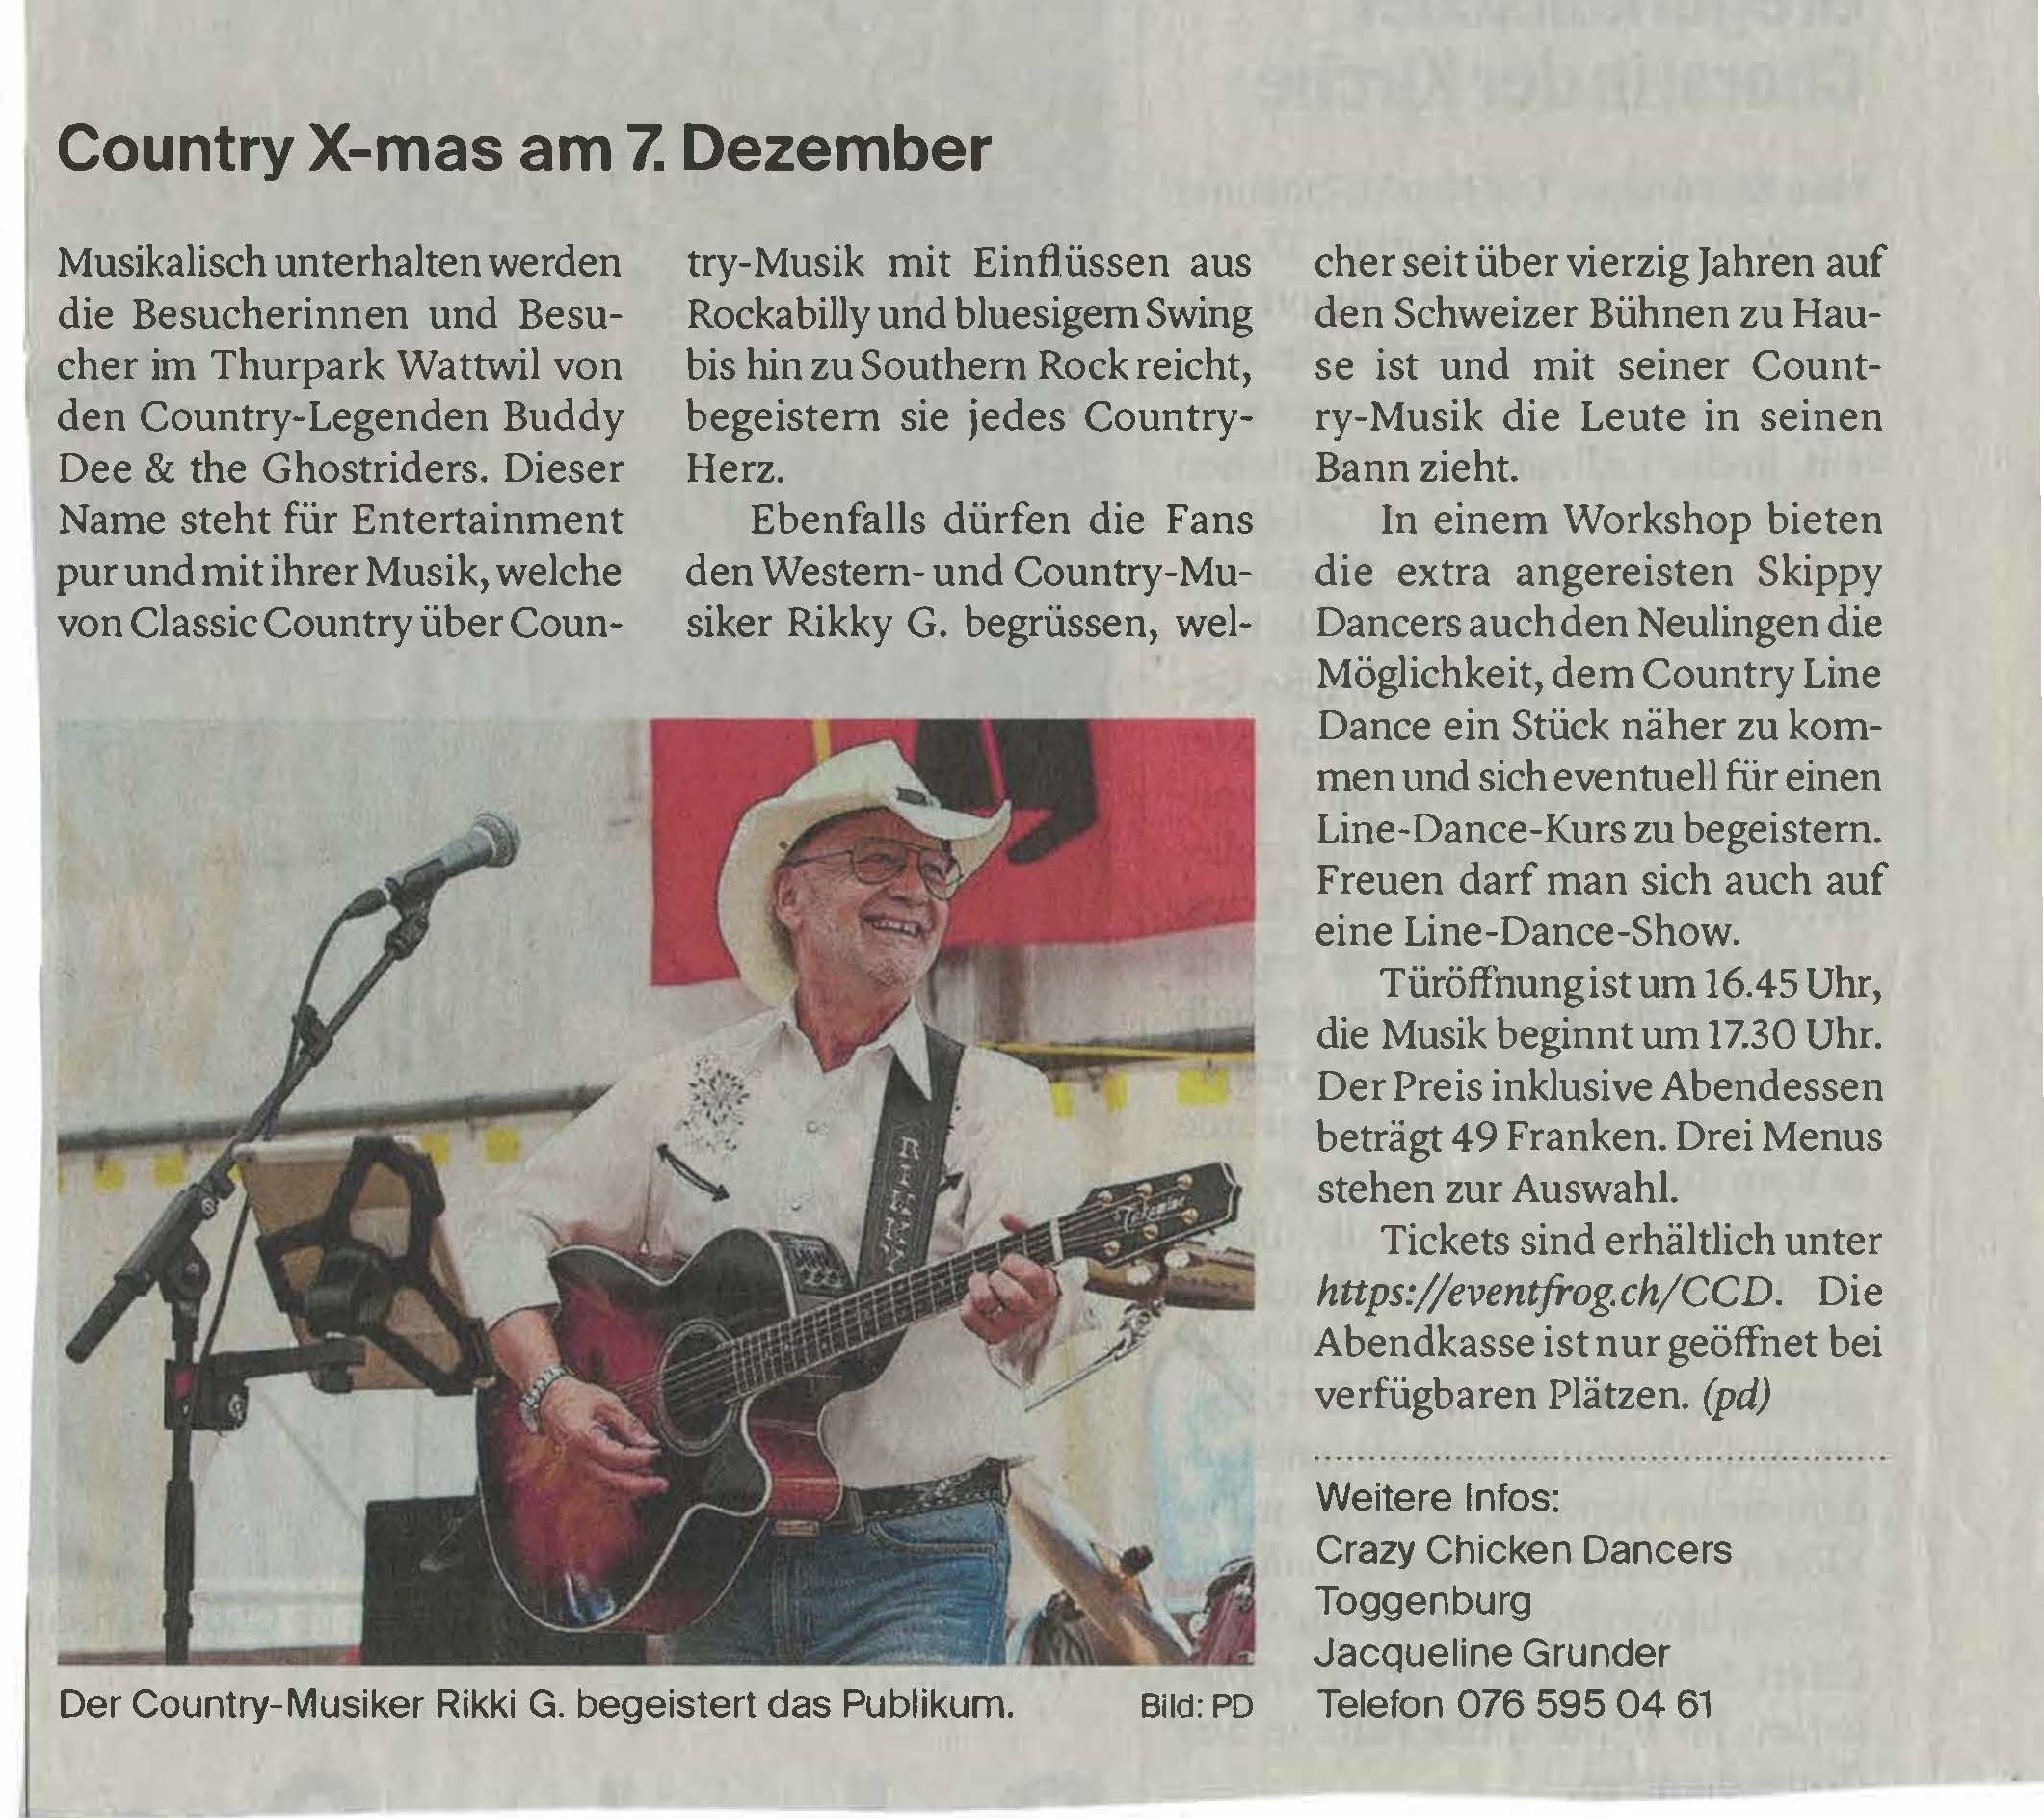 Country X-mas am 7. Dezember 2019